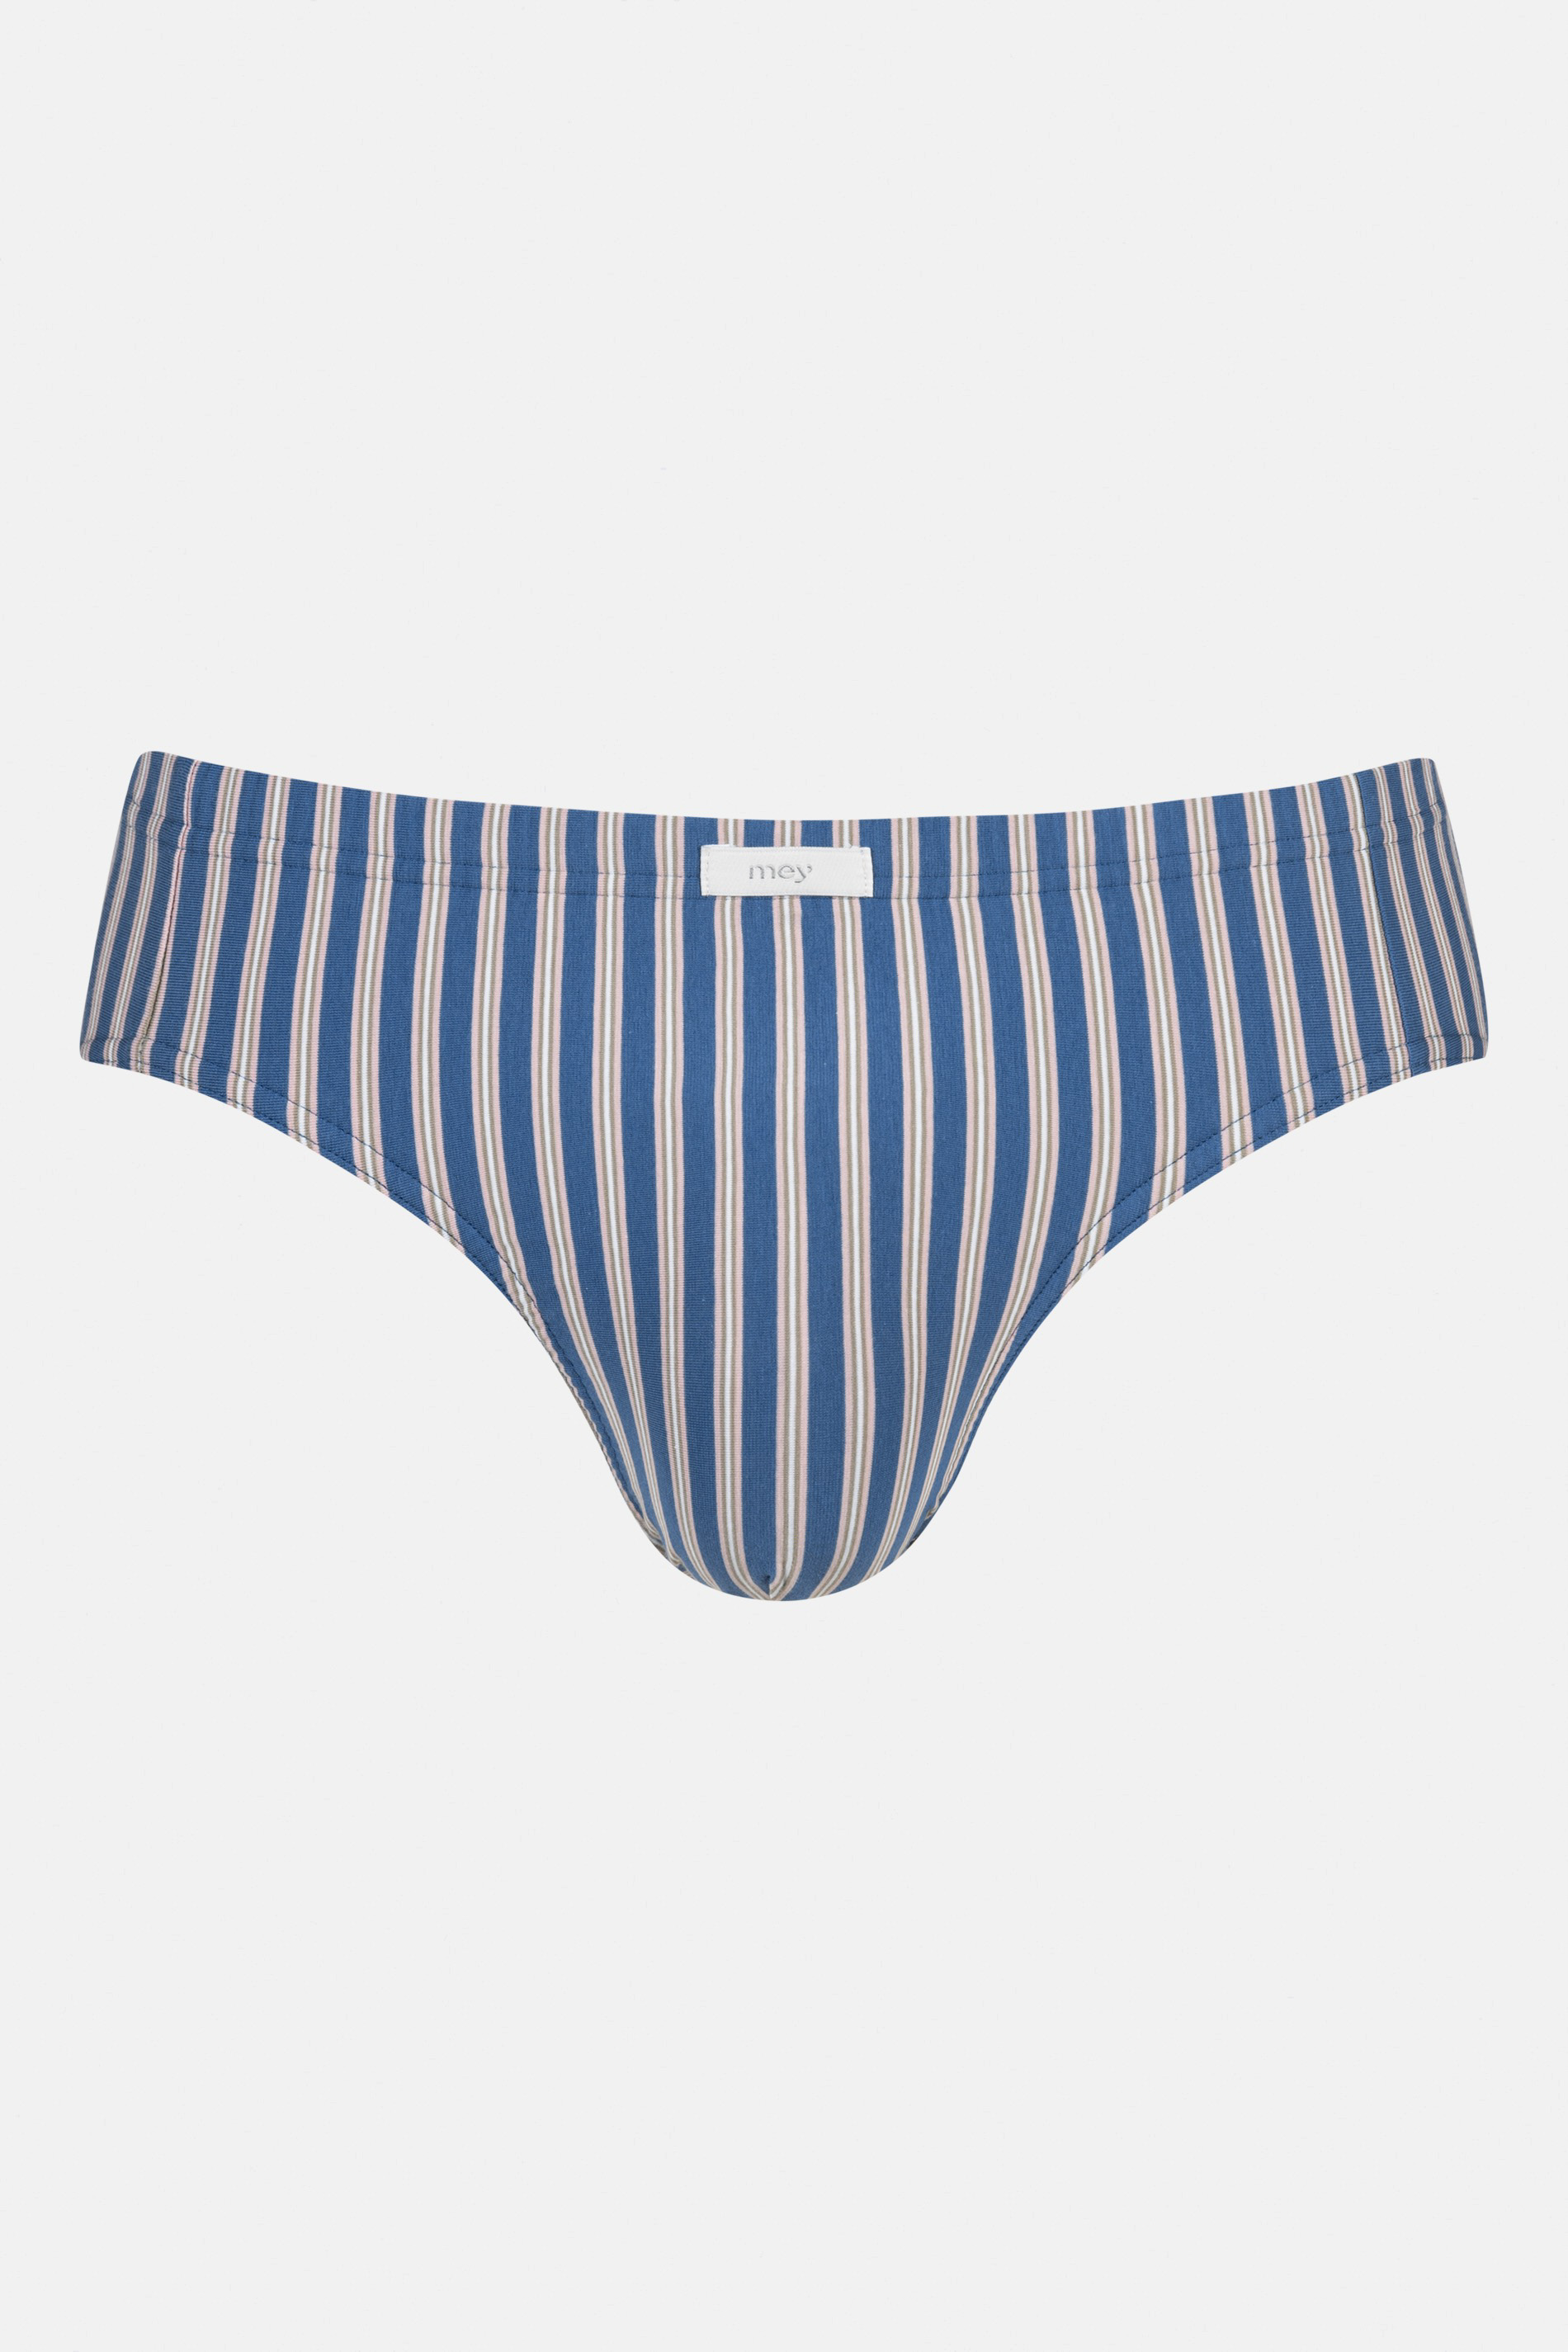 Jazz-pants Serie Blue Stripes Uitknippen | mey®